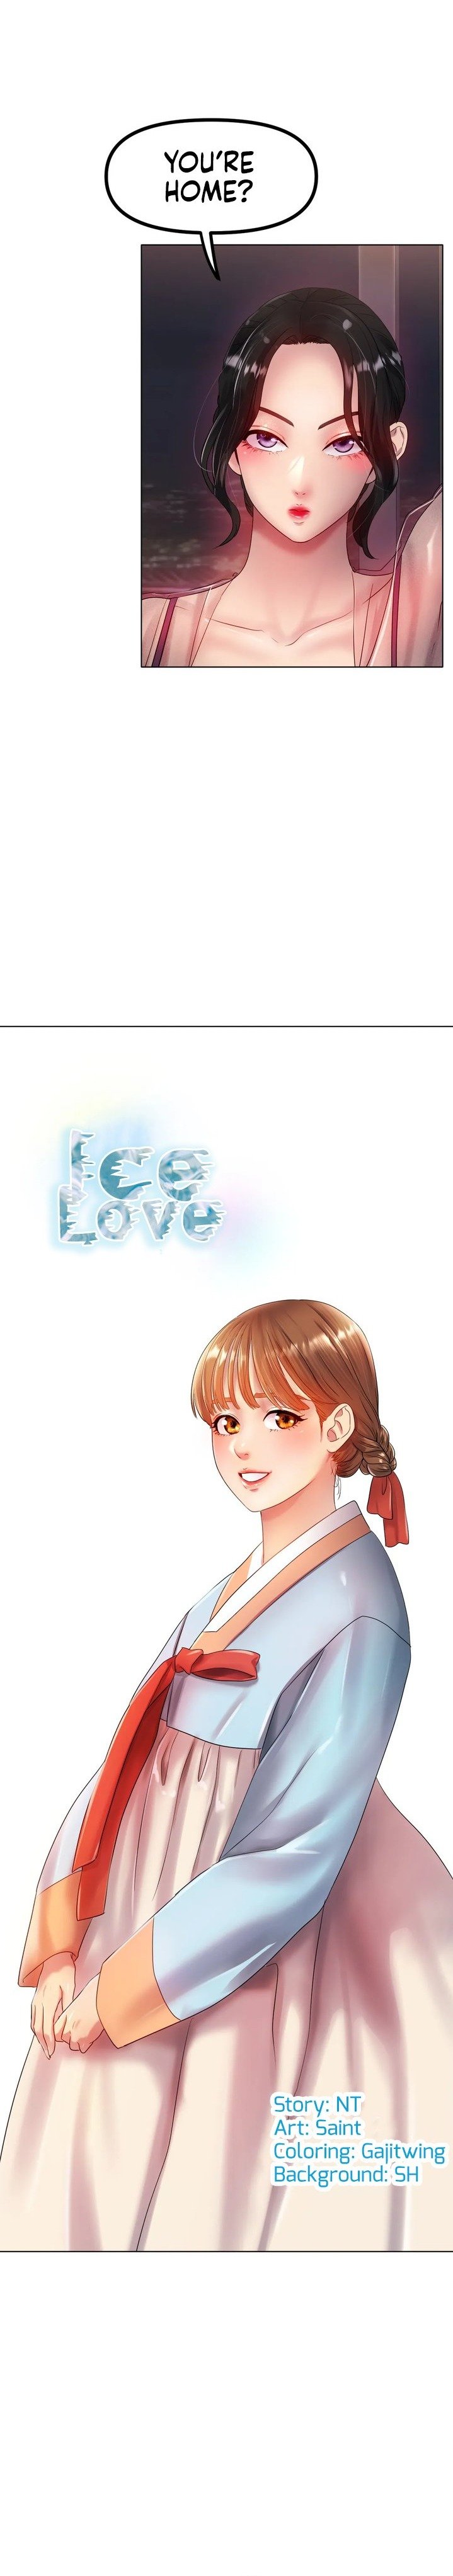 ice-love-chap-41-6